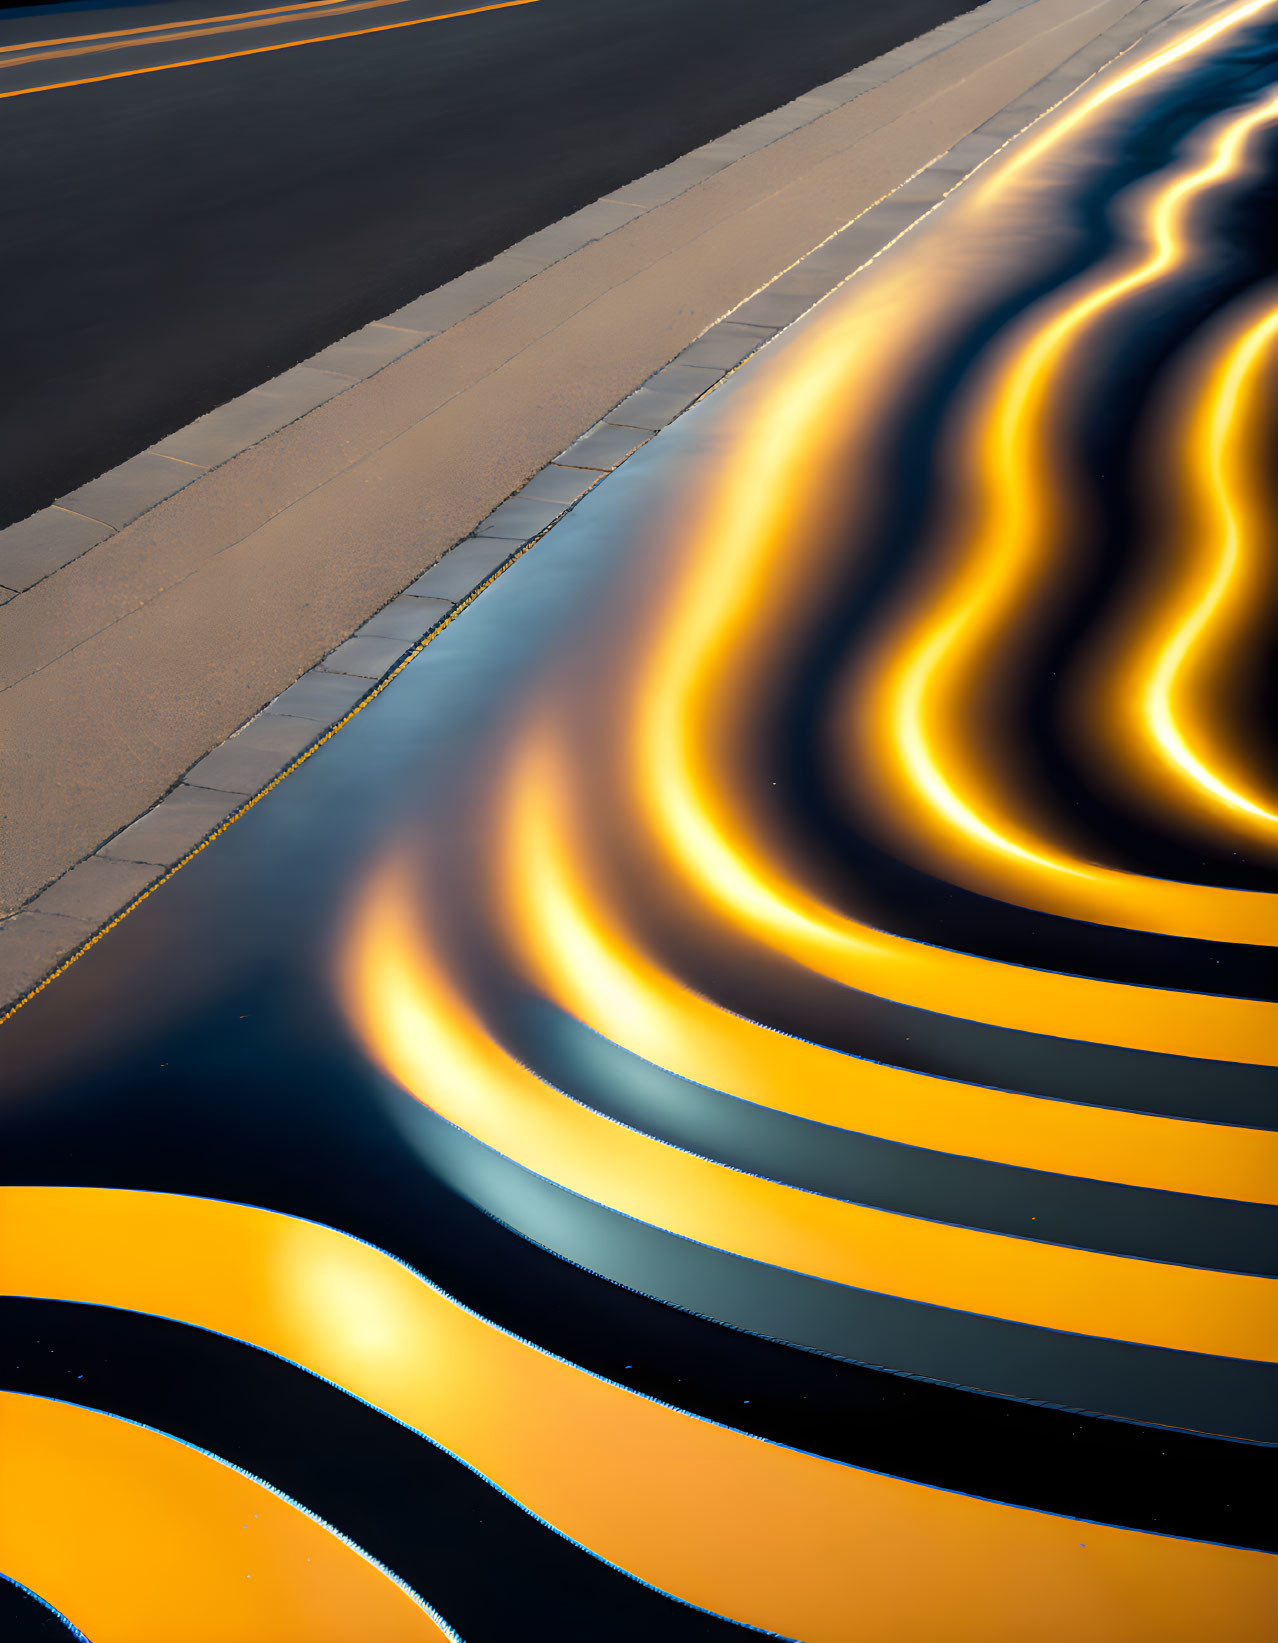 Surreal optical illusion: Undulating neon-like road lines